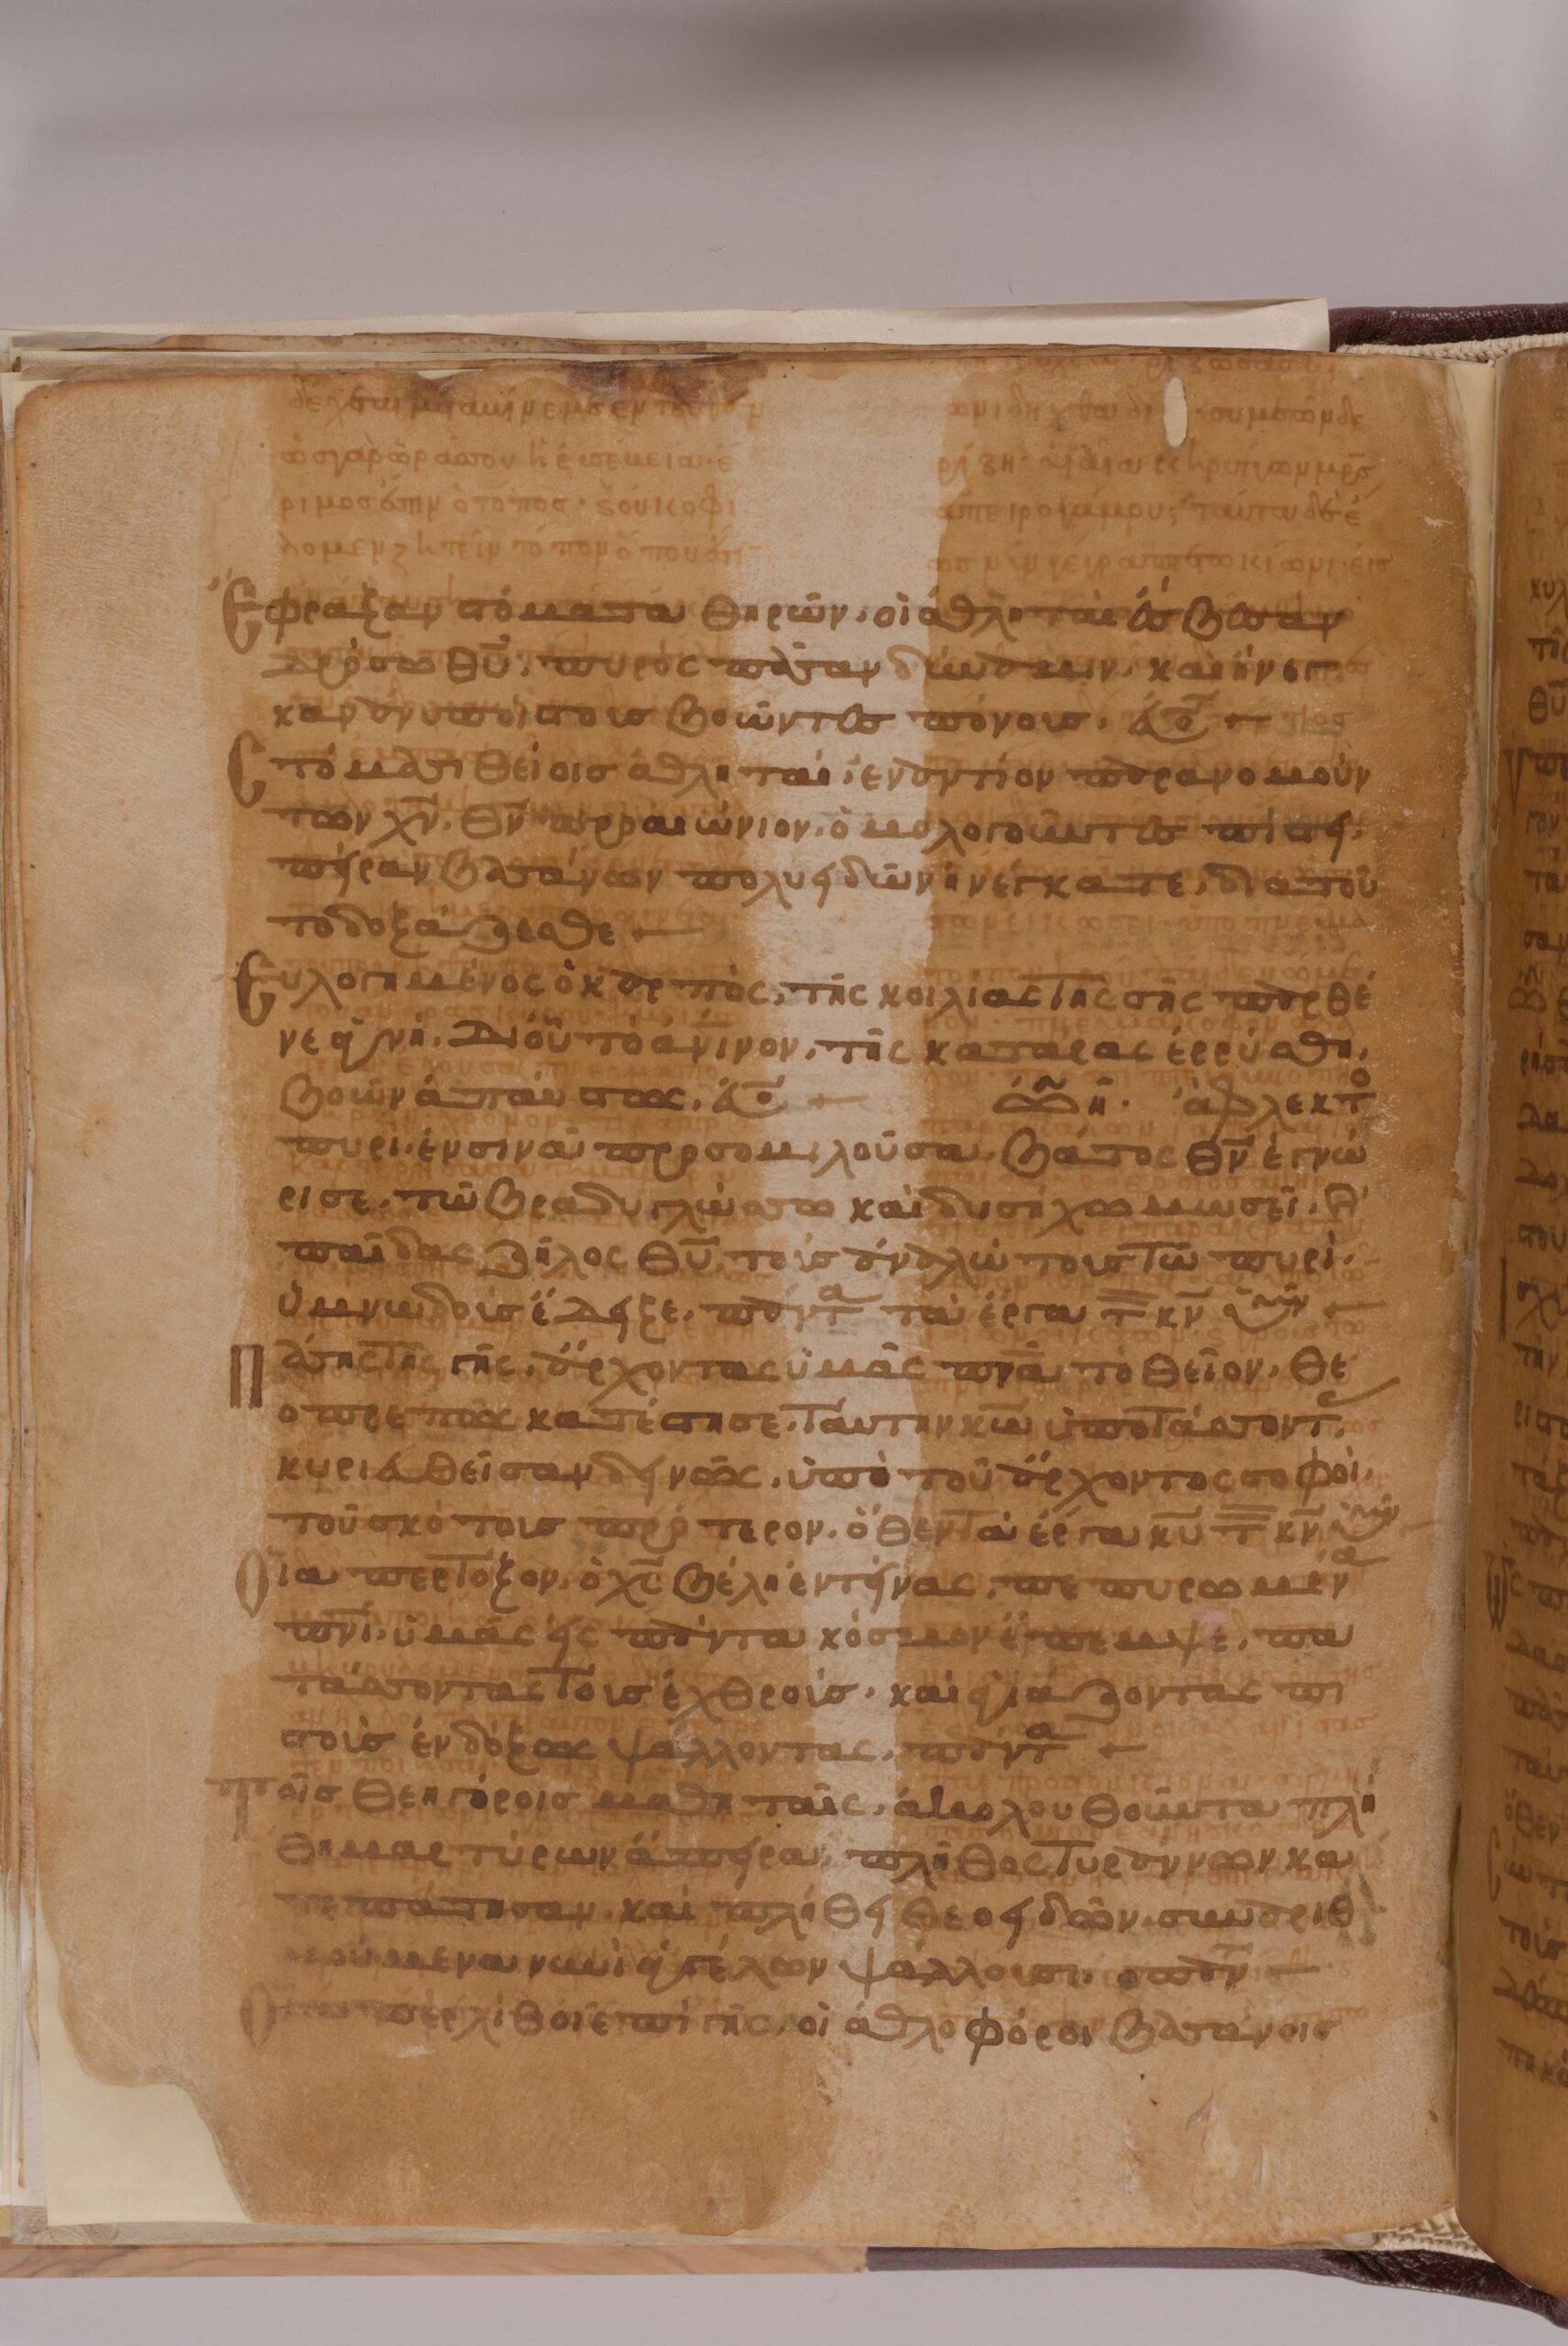 Verona, Biblioteca Capitolare, ms. CXXXIV (123), f. 51v